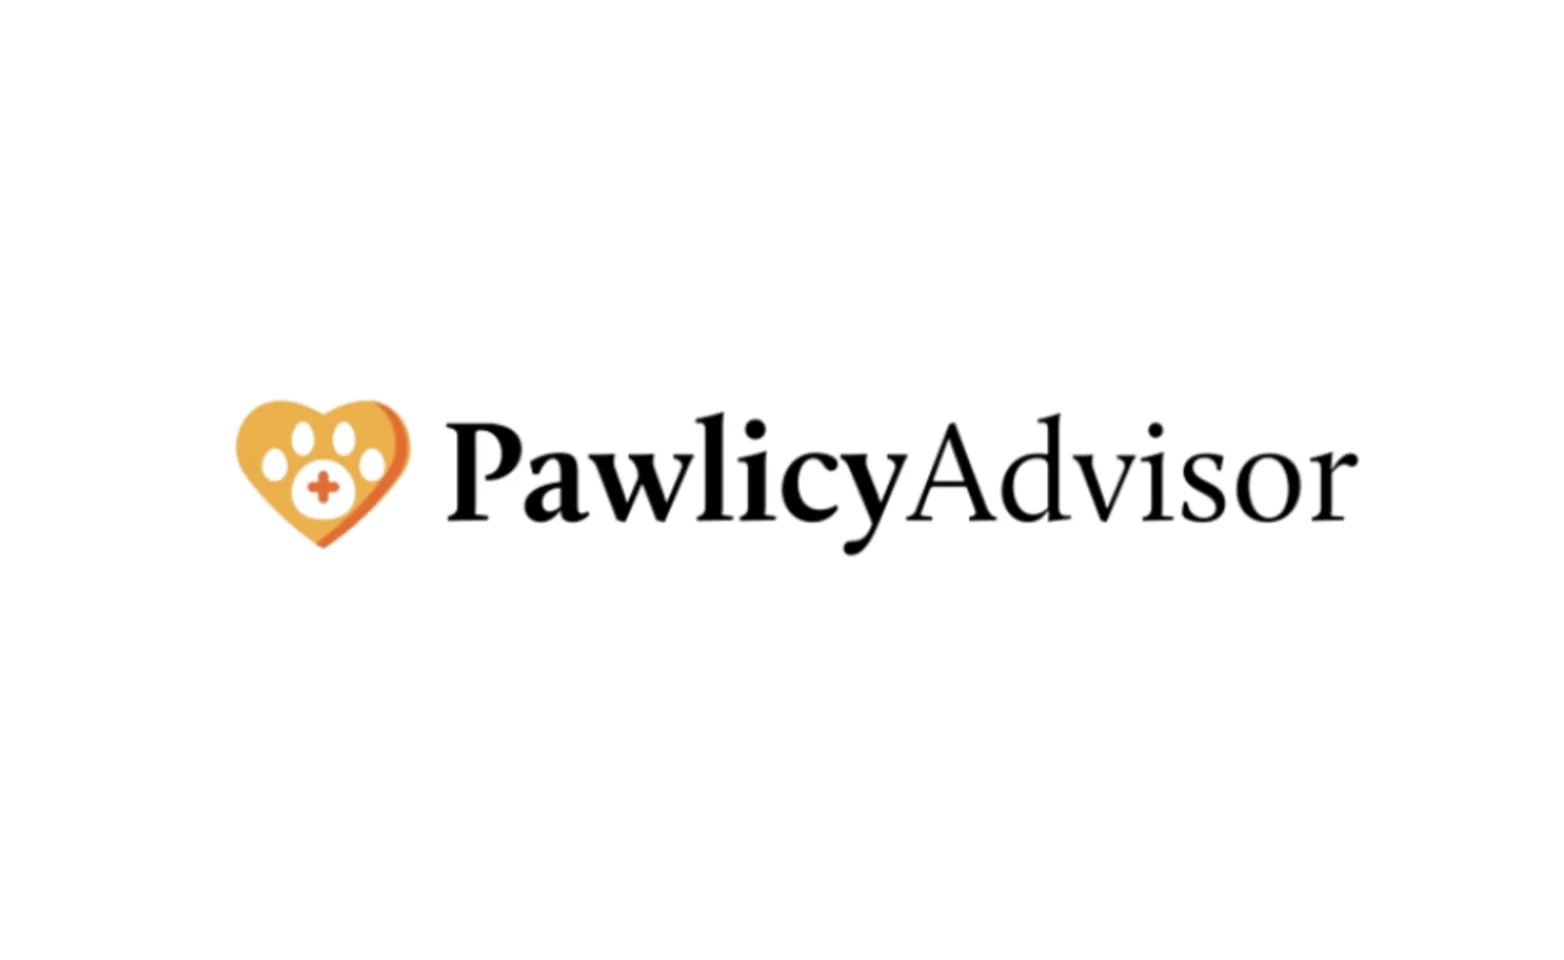 Pawlicy Advisor Logo w/ White Background